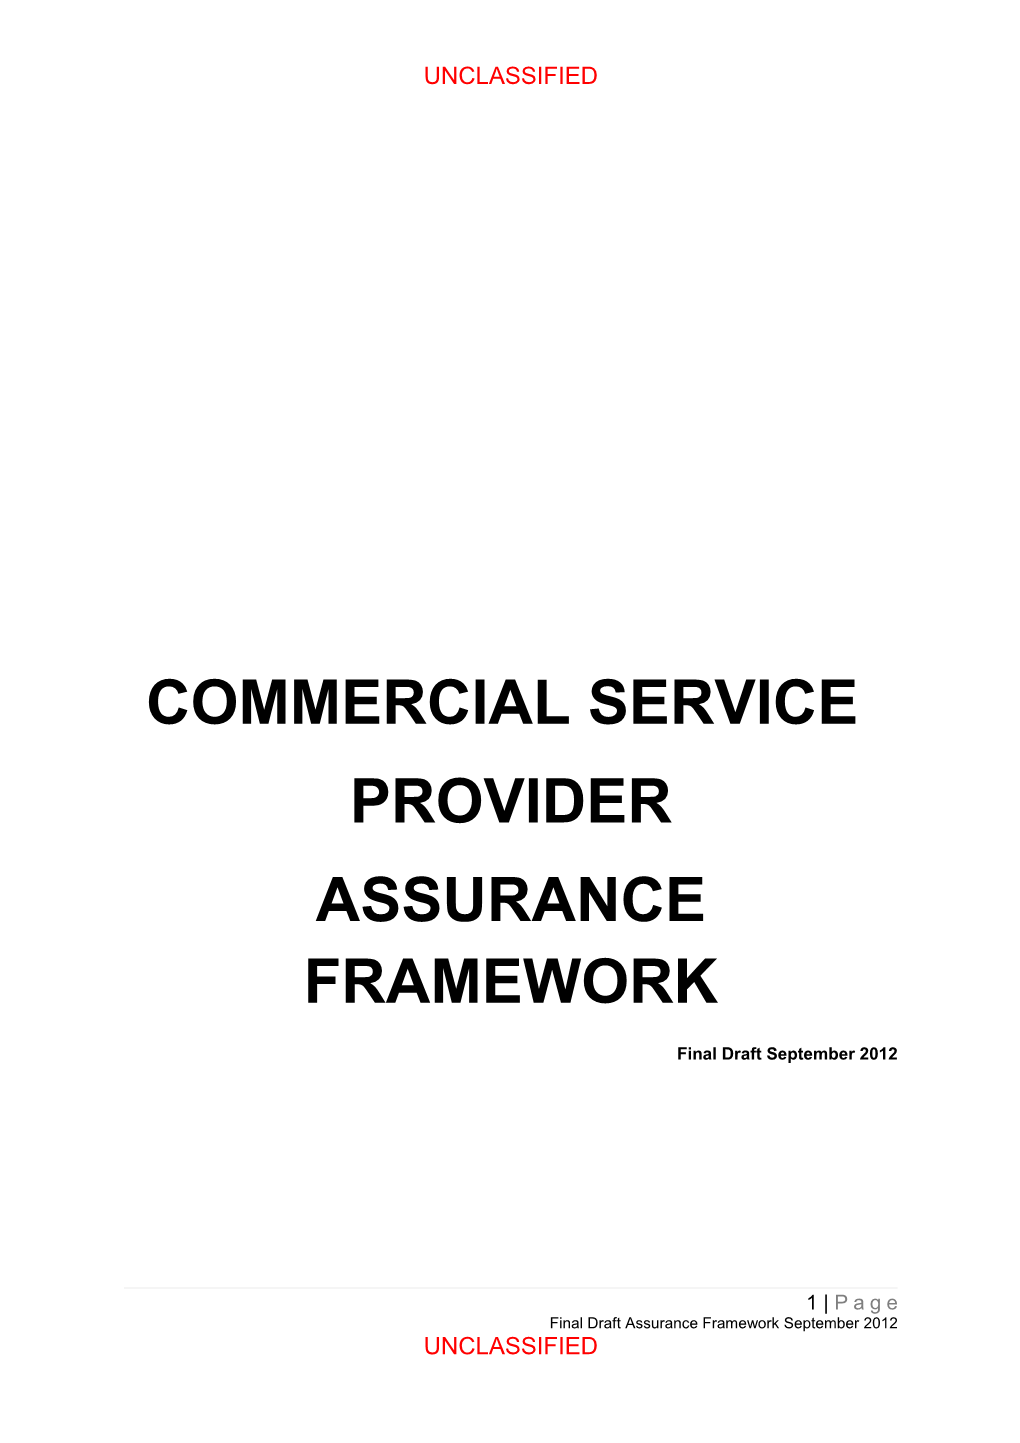 Commercial Service Provider Assurance Framework